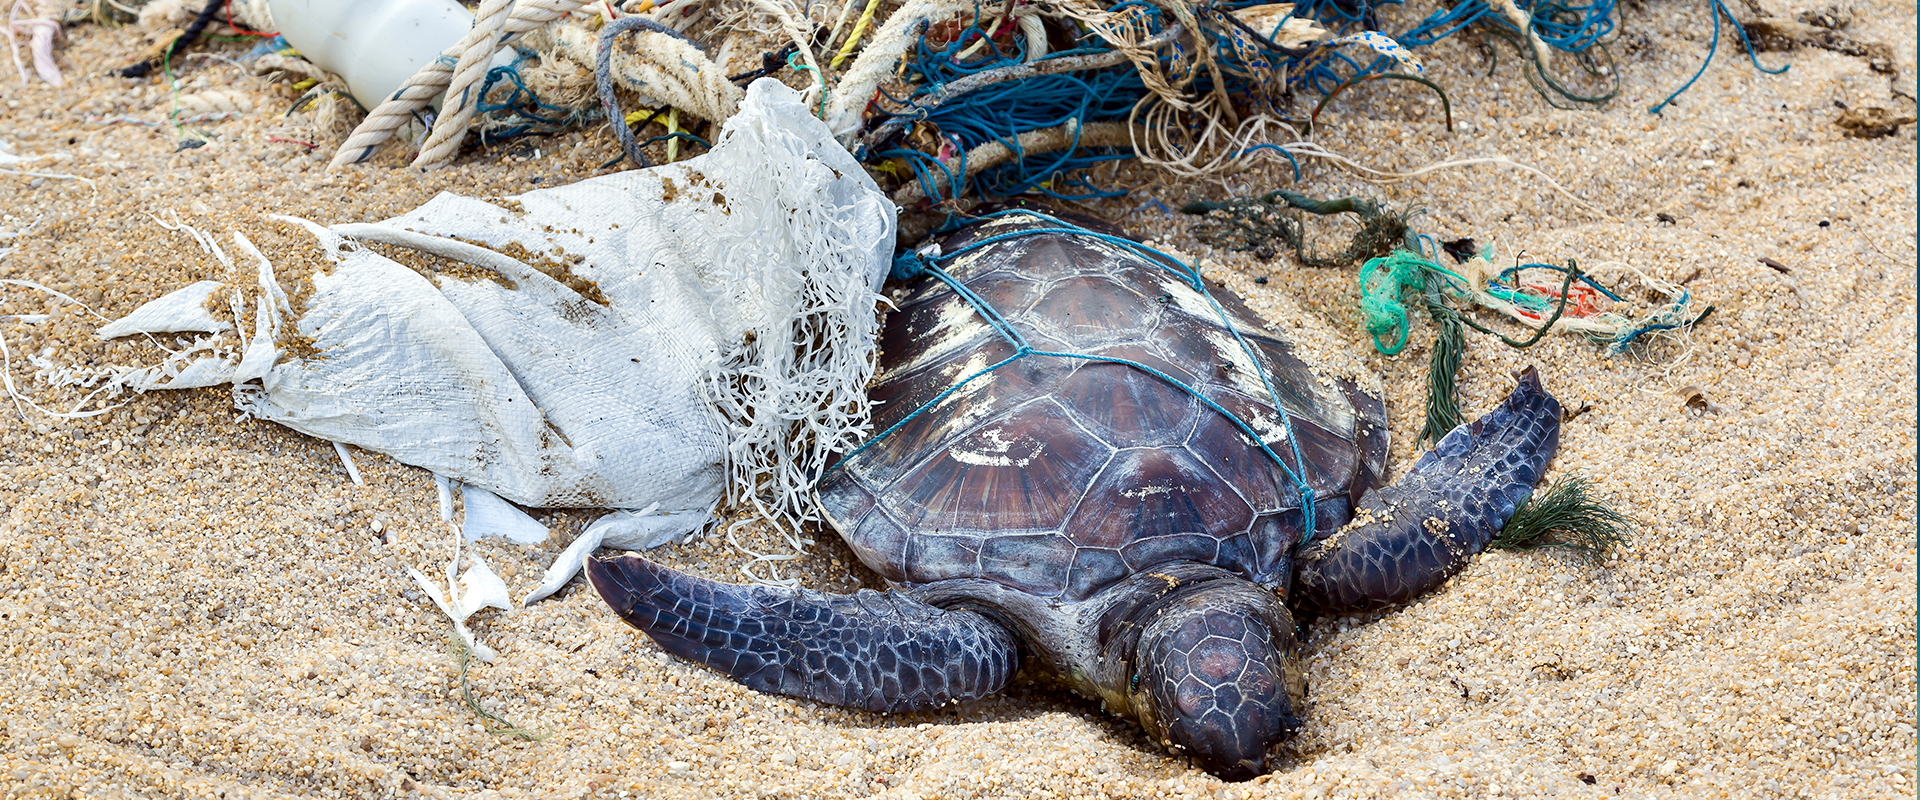 090 plastic in ocean turtle